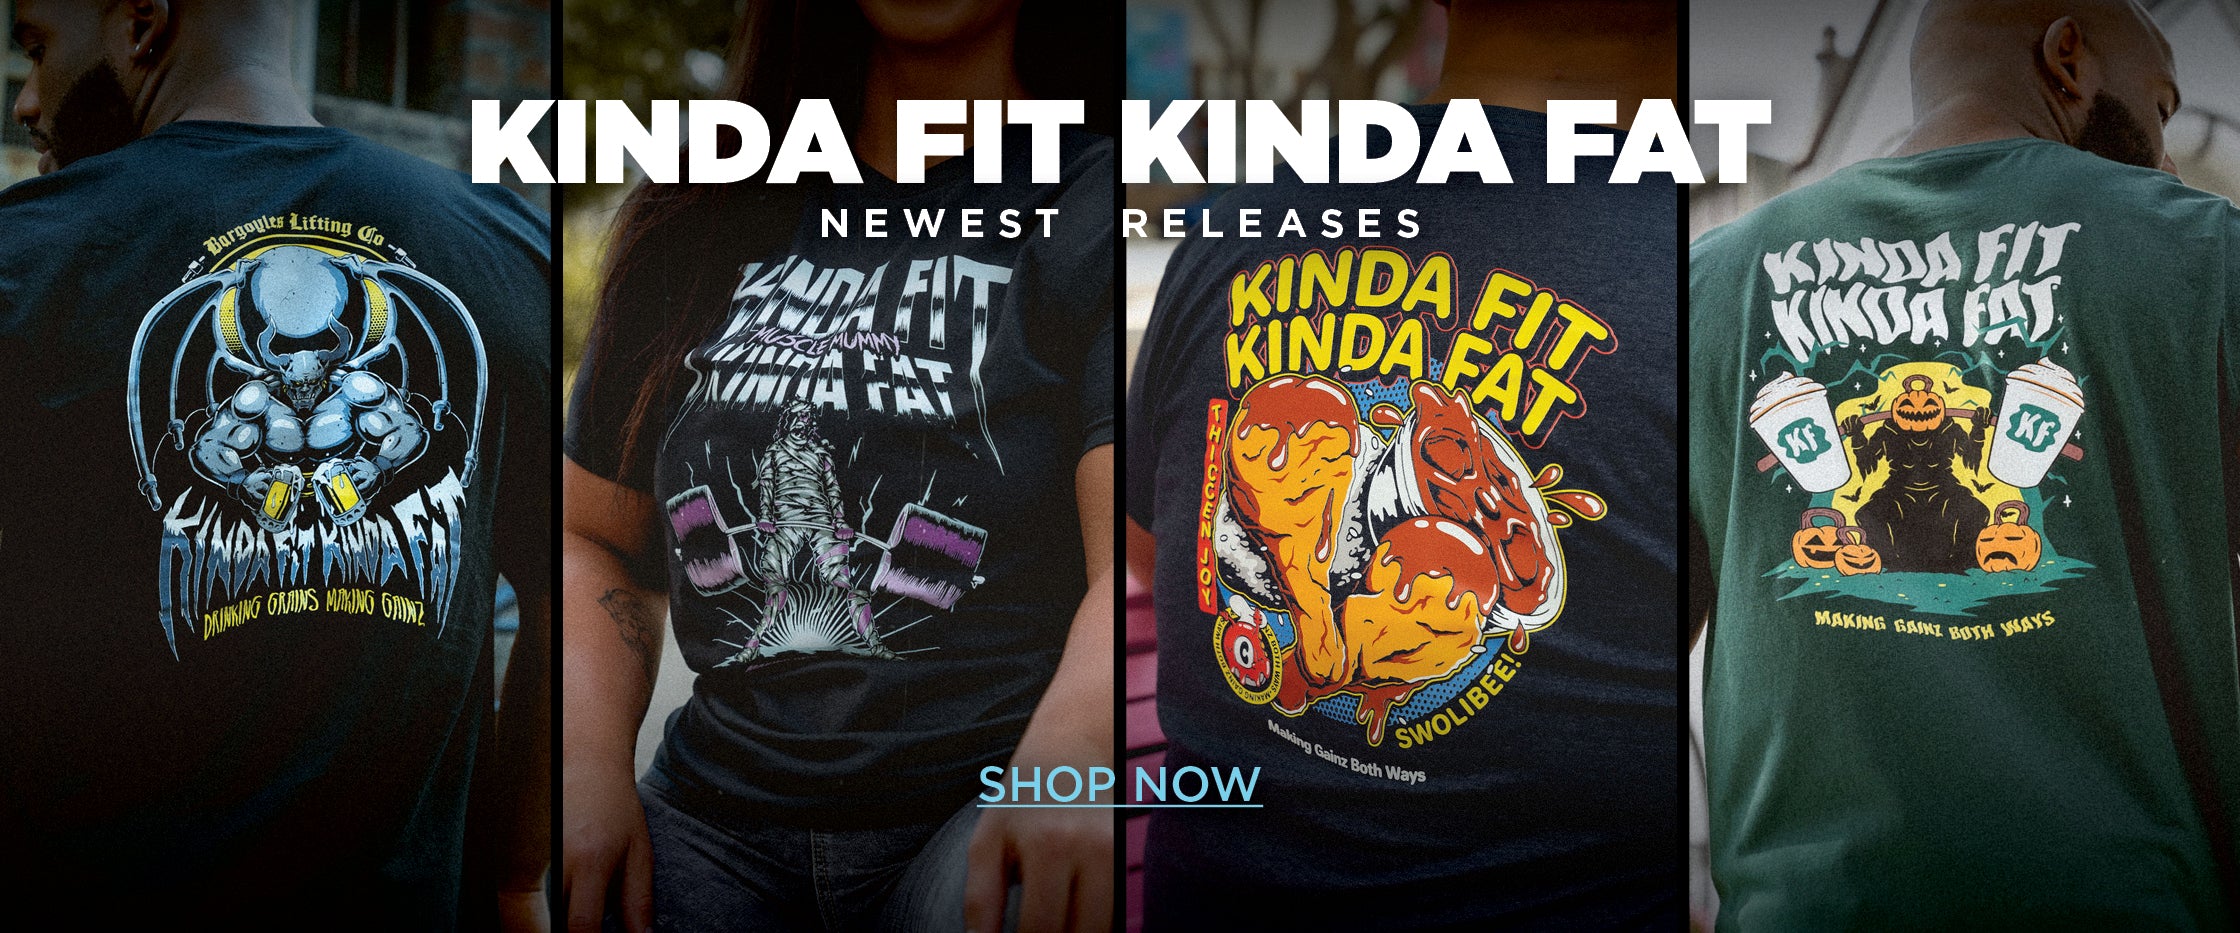 kinda-fit-kinda-fat-newest-releases_shop-now